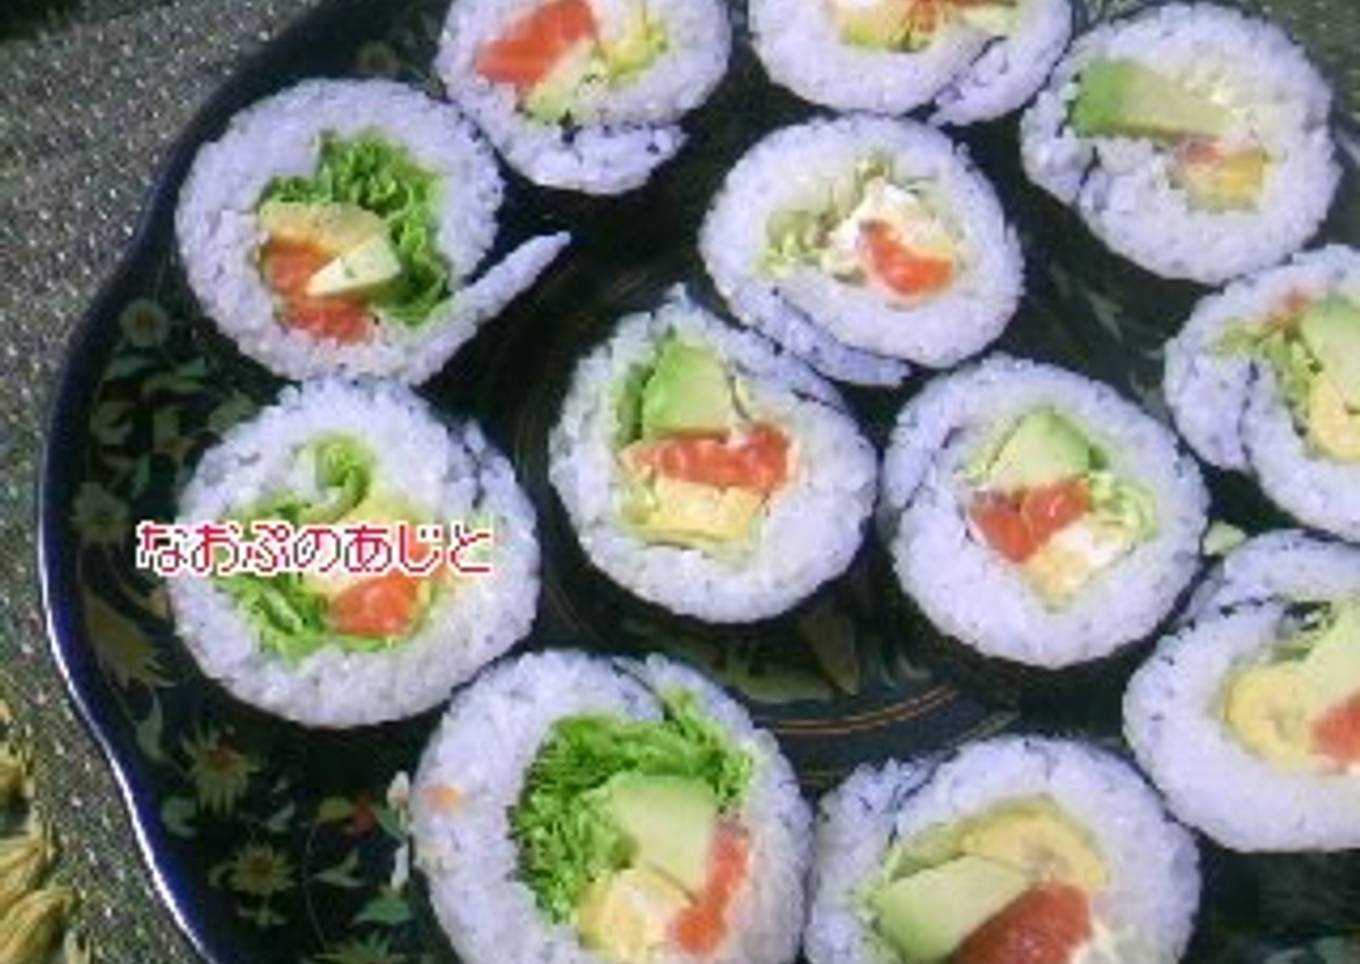 Salmon and Avocado Fat Sushi Rolls (Futomaki)